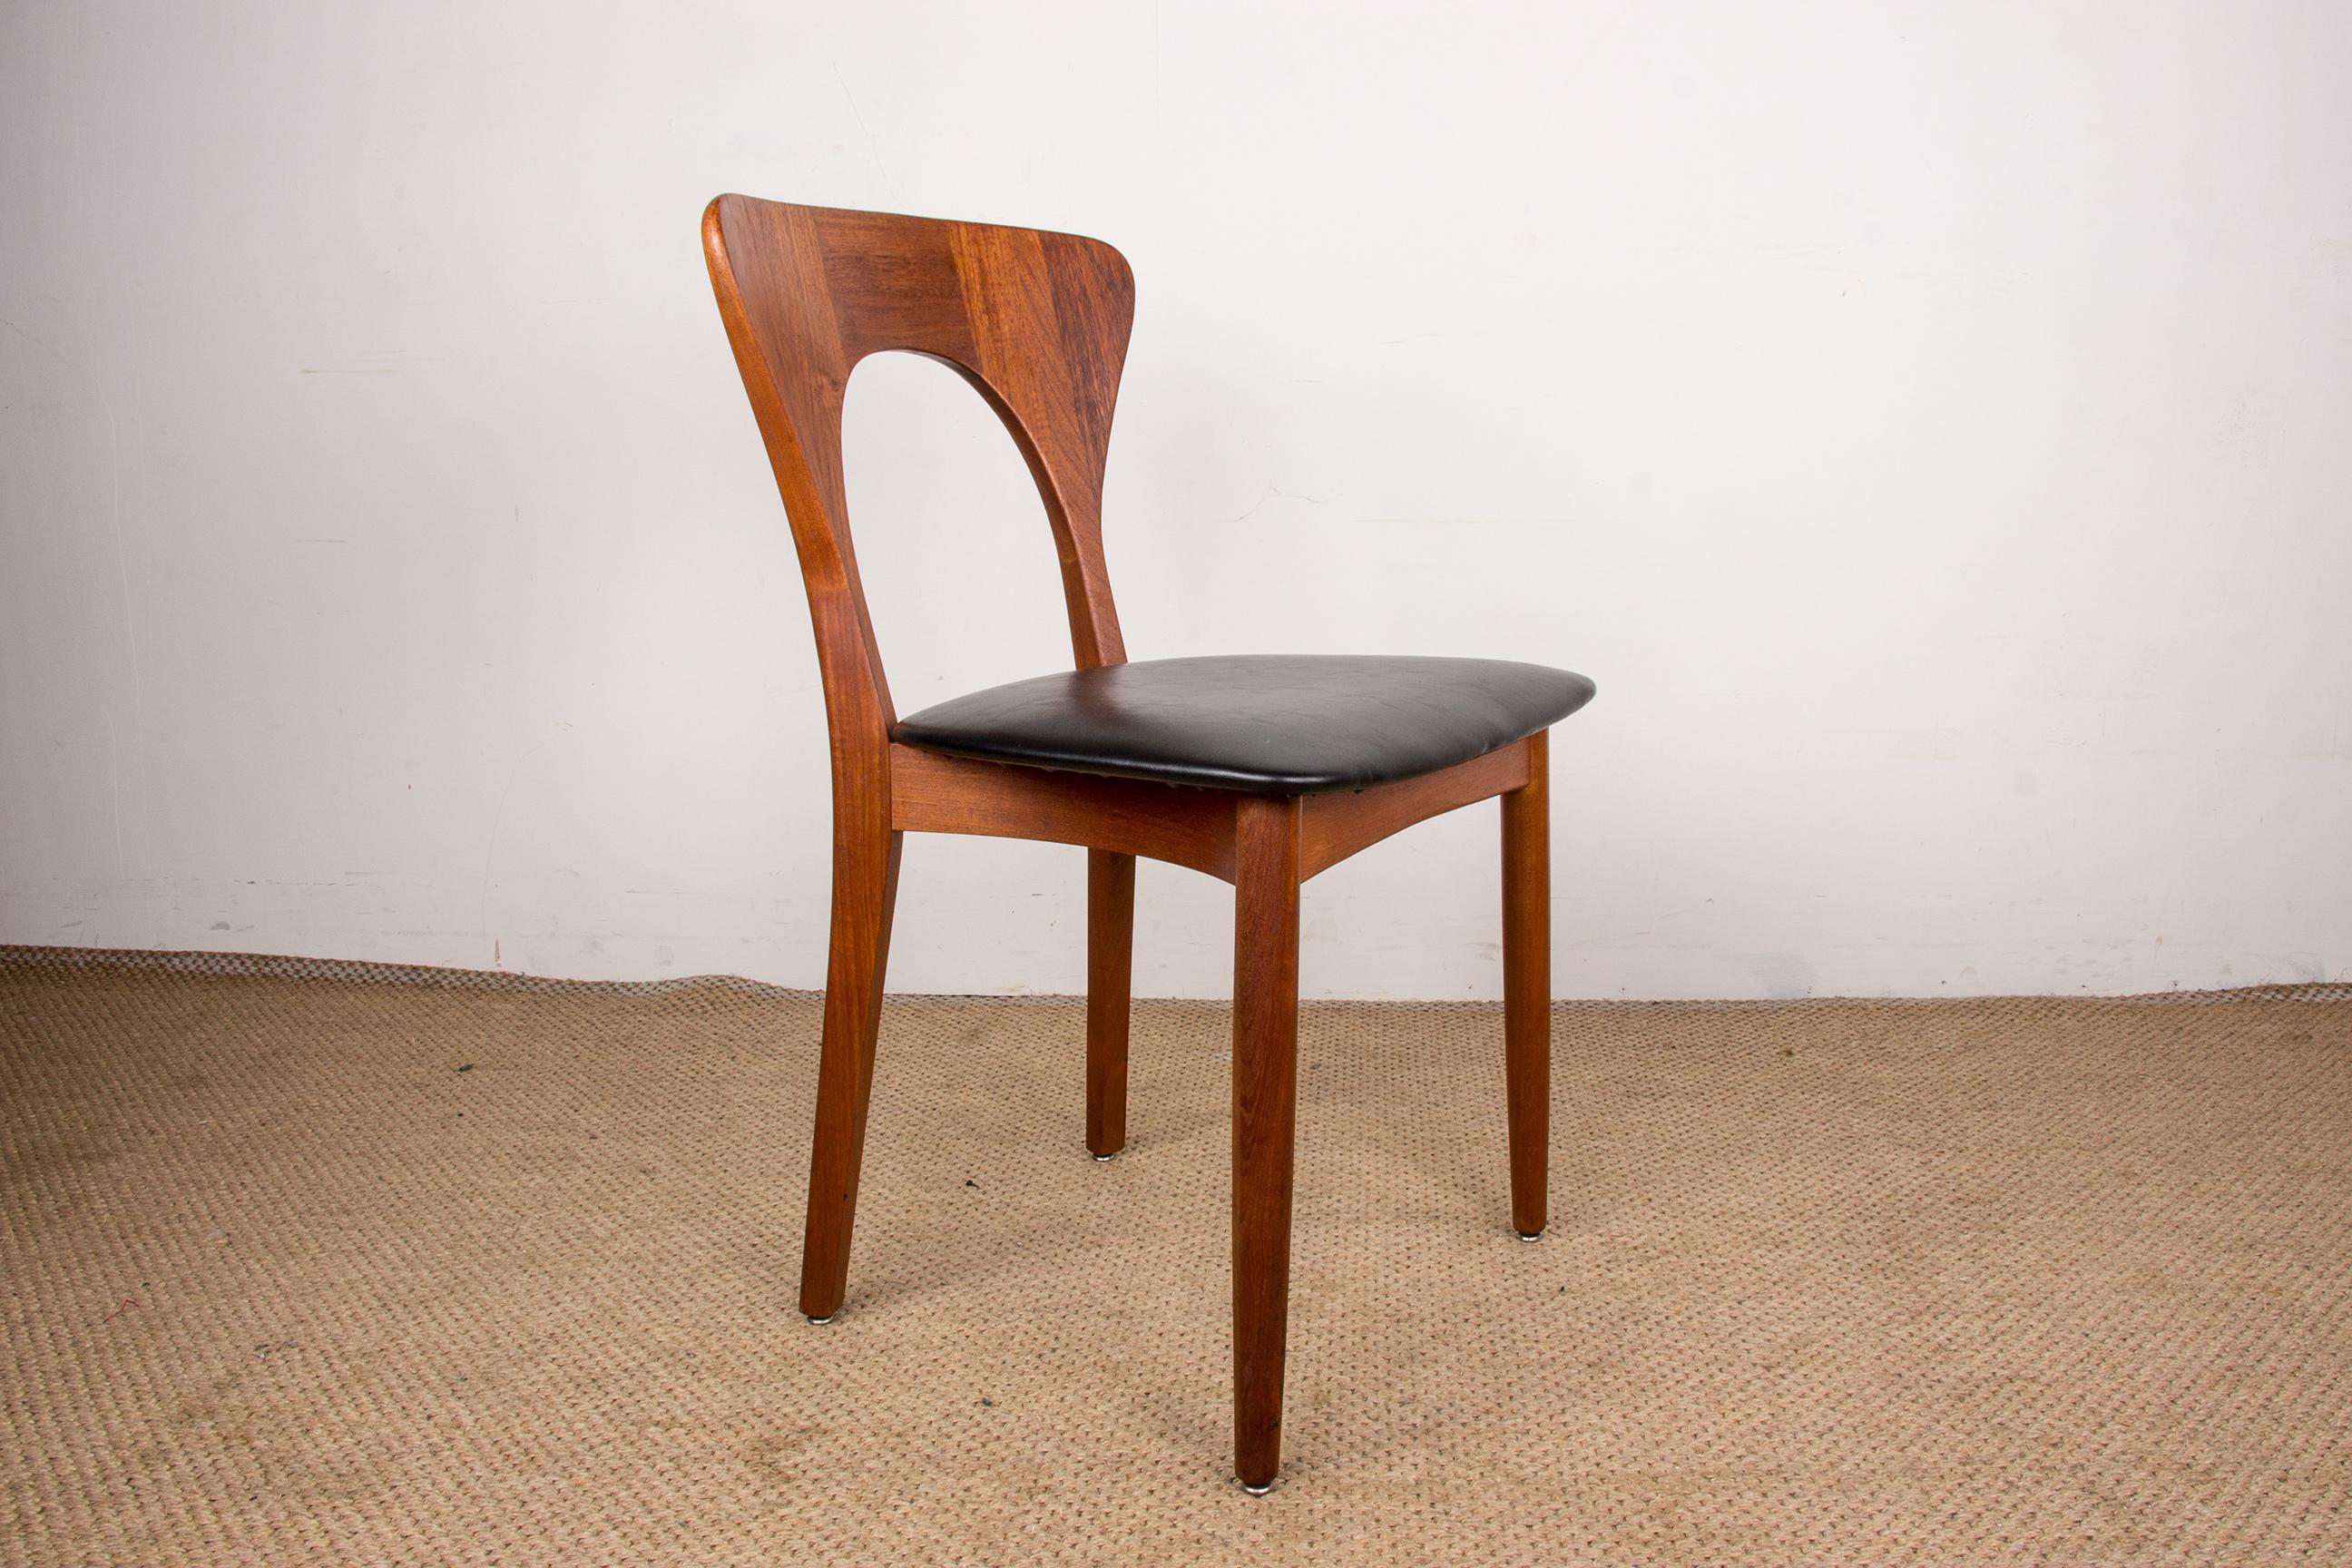 Faux Leather Series of 6 Danish chairs in Teak and skai, Peter model by Niels Koefoed 1960.